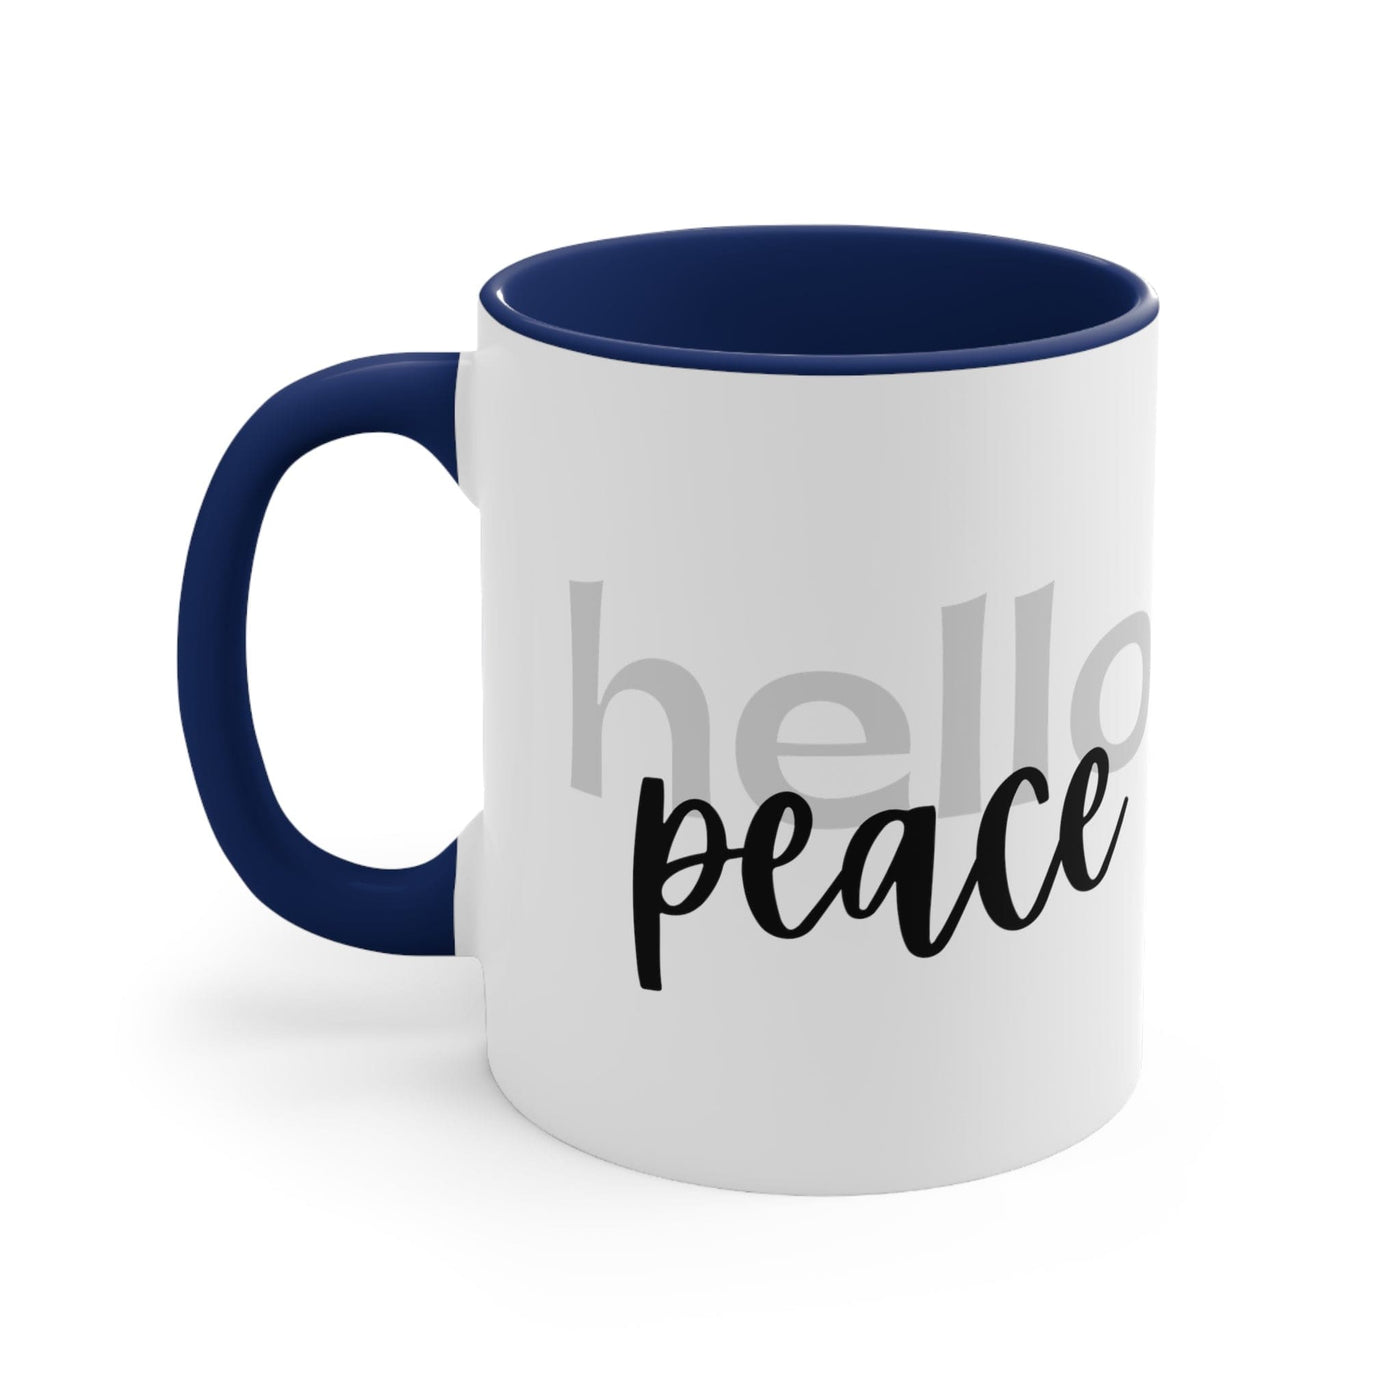 Accent Ceramic Mug 11oz - Hello Peace Motivational Peaceful Aspiration